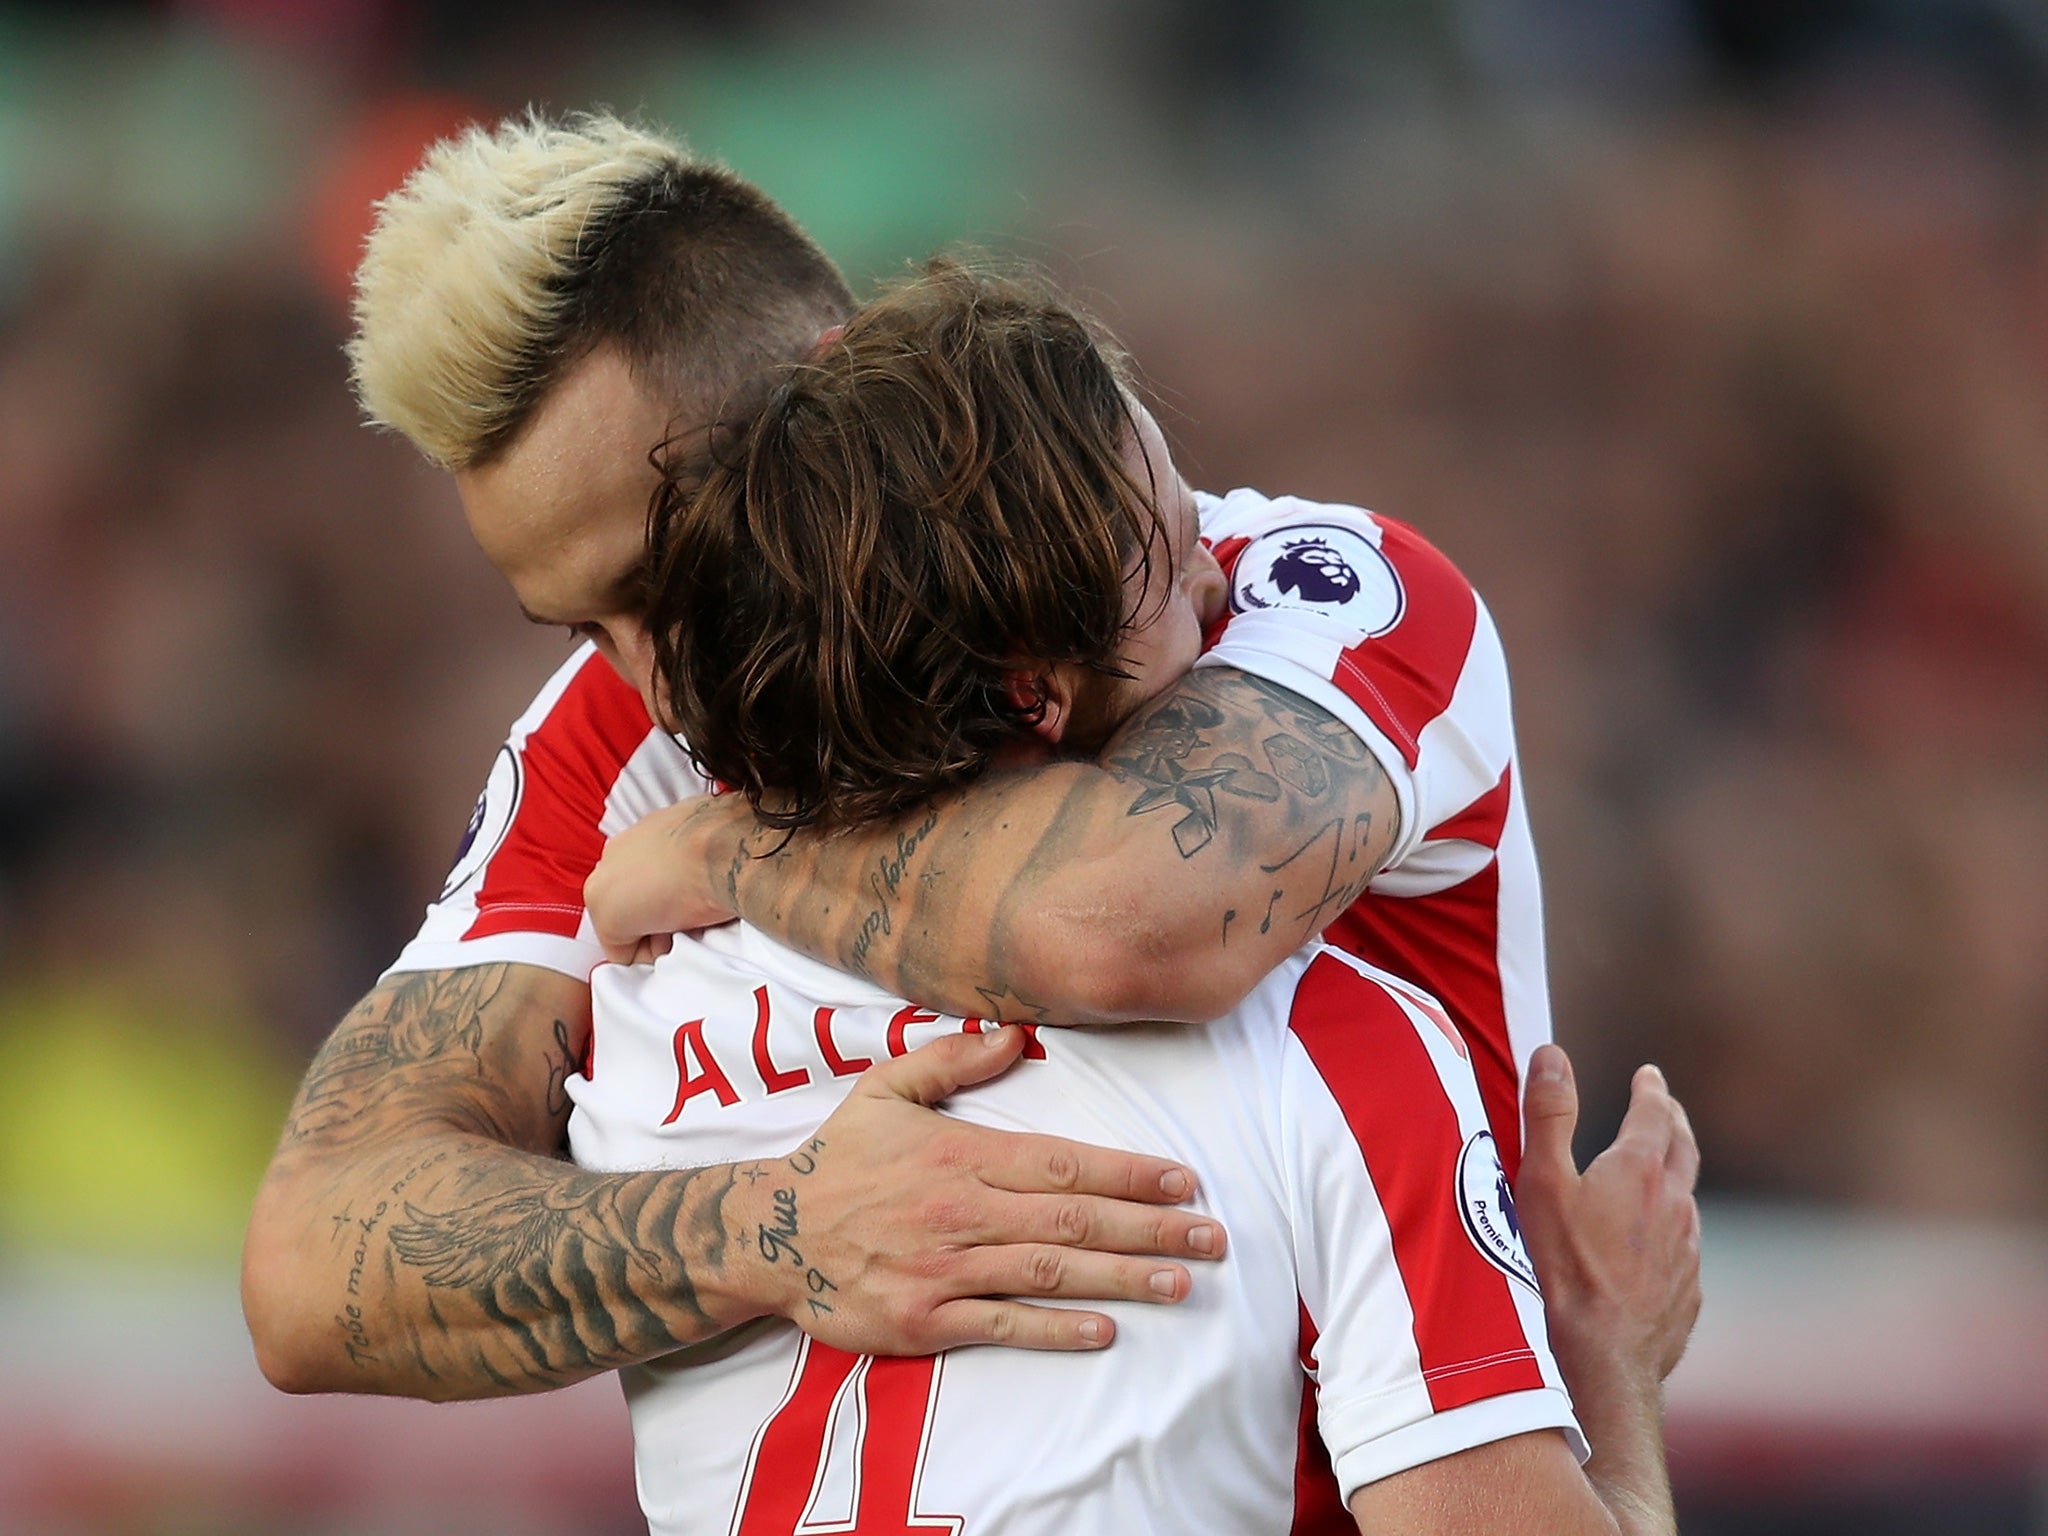 Arnautovic embraces goalscorer Allen after his second strike